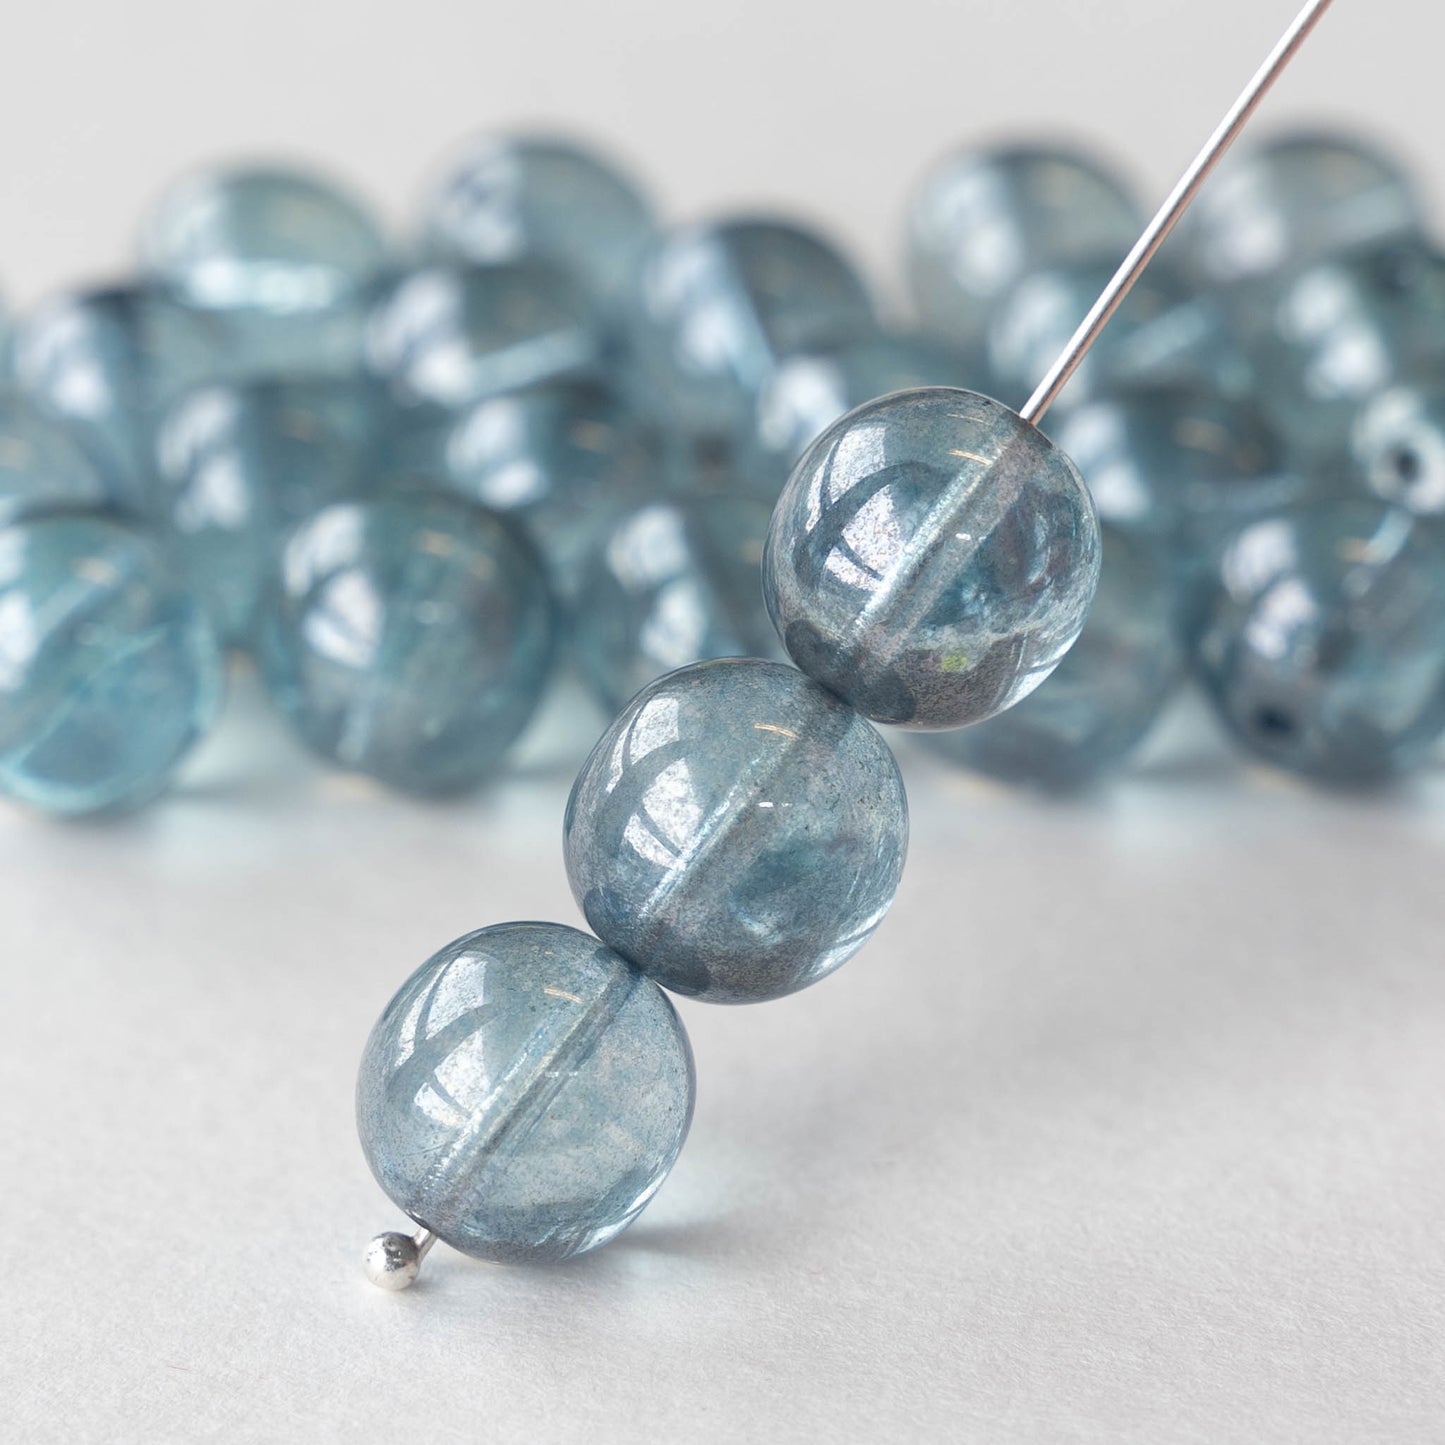 10mm Round Glass Beads - Transparent Slate Blue - 10 Beads